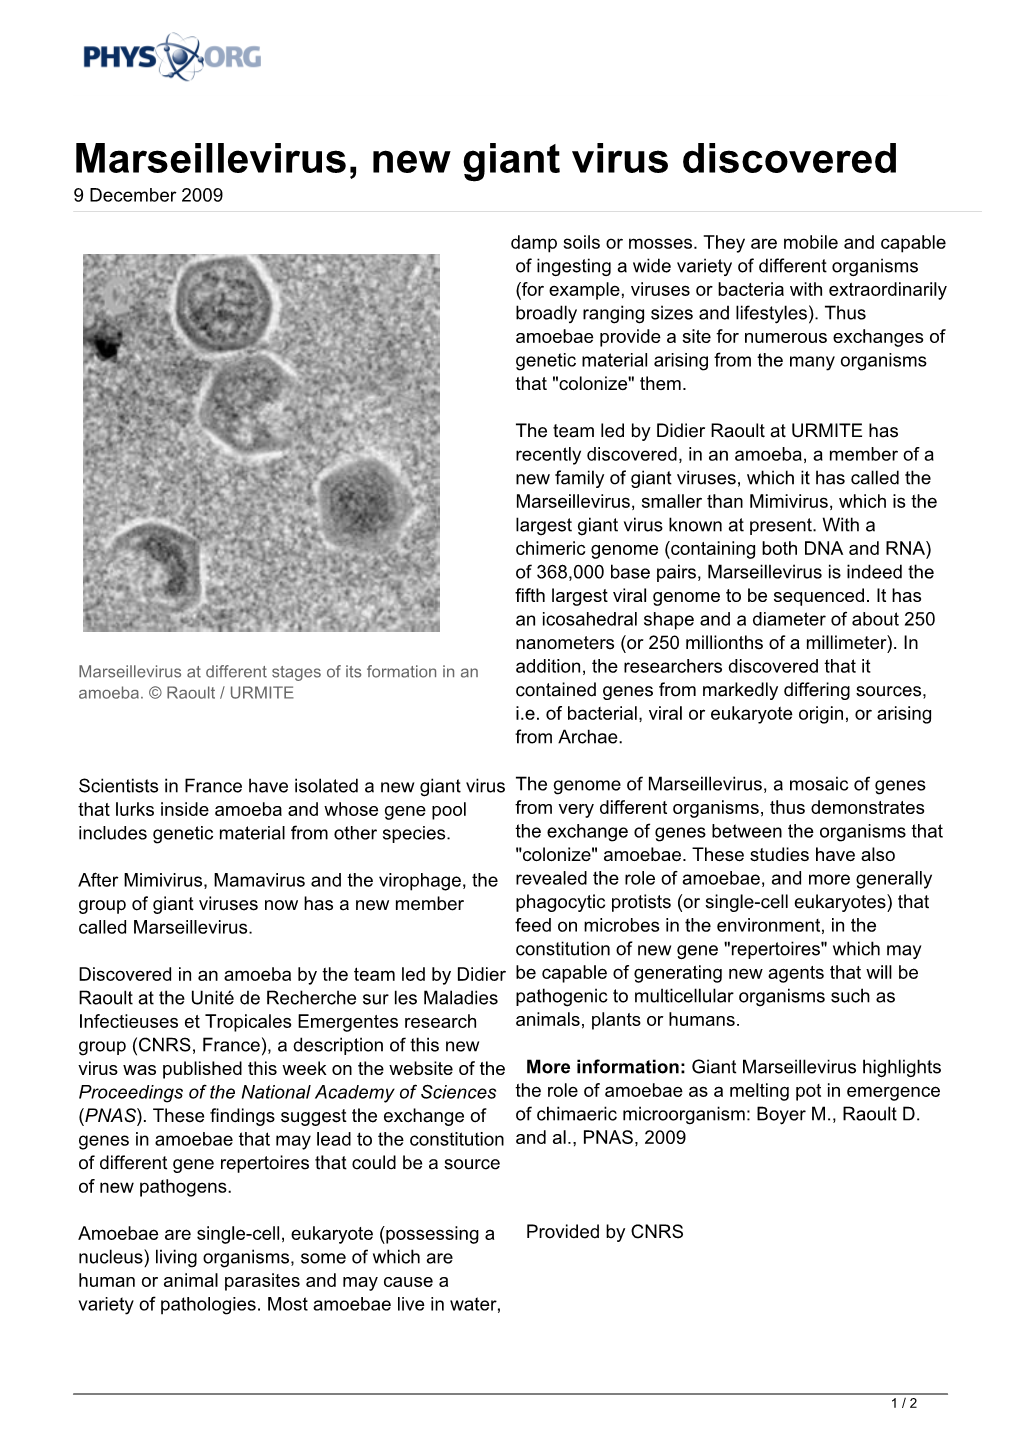 Marseillevirus, New Giant Virus Discovered 9 December 2009